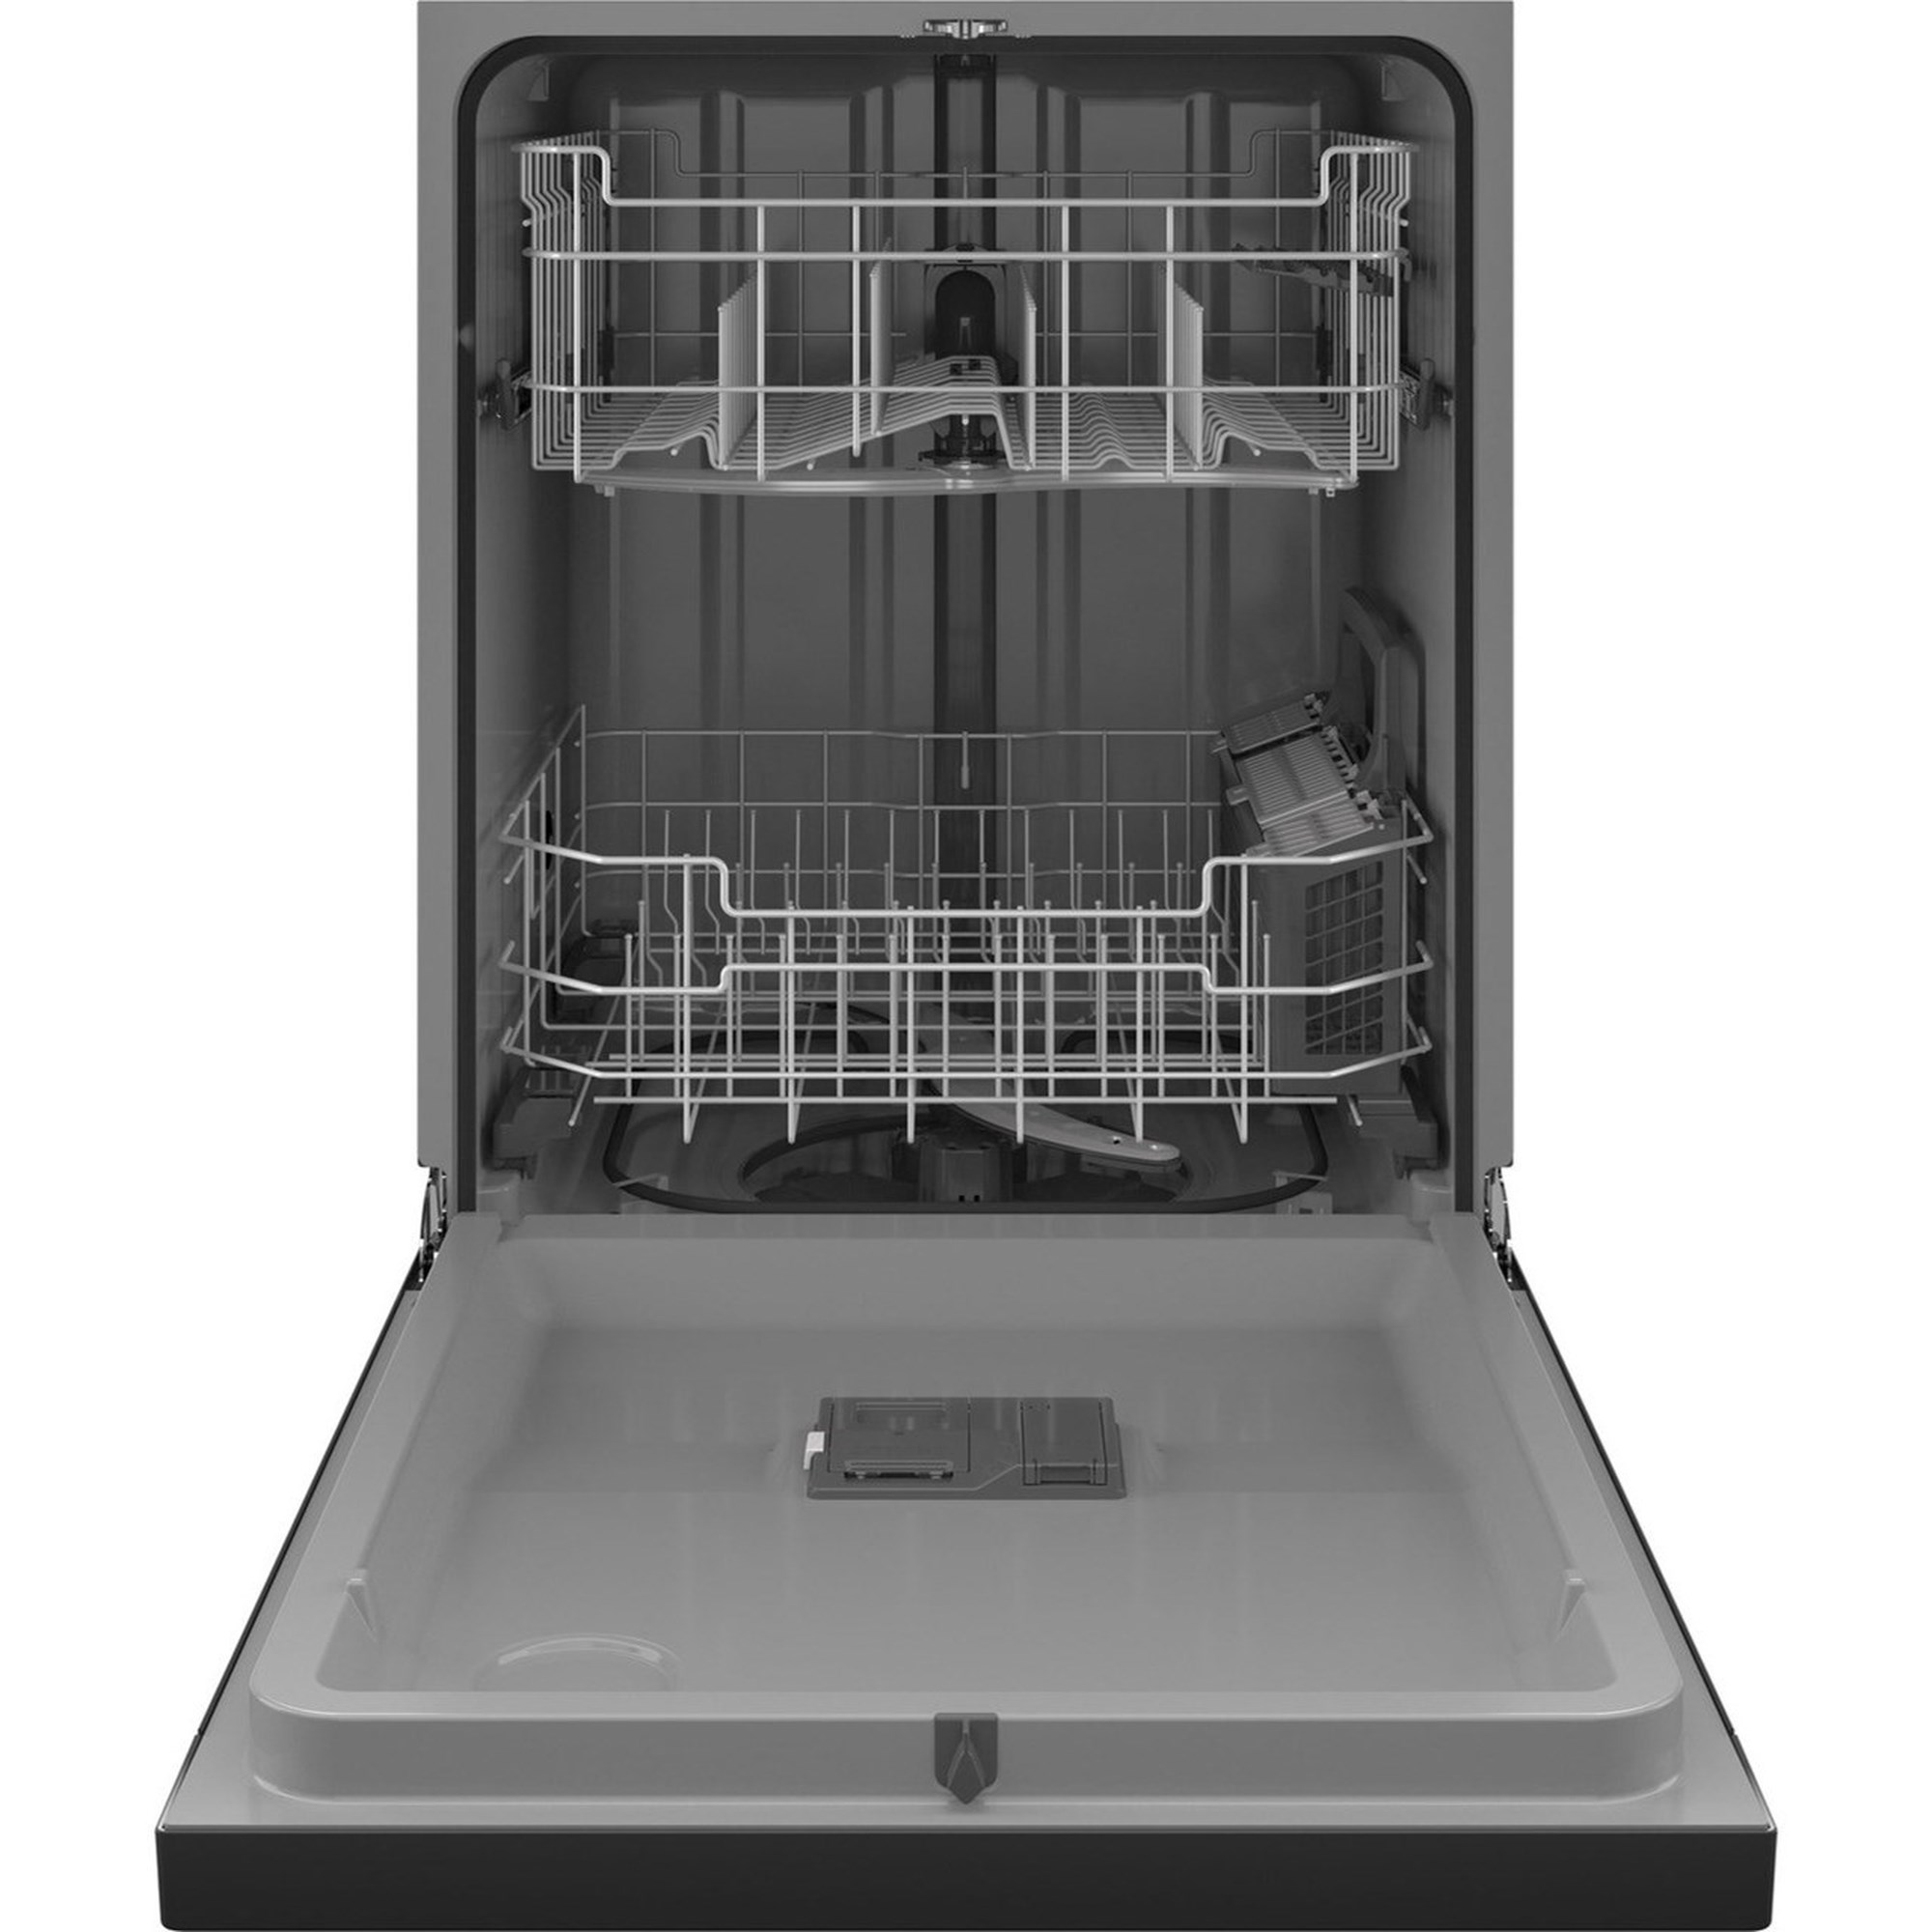 Dishwashers On Sale, Appliances